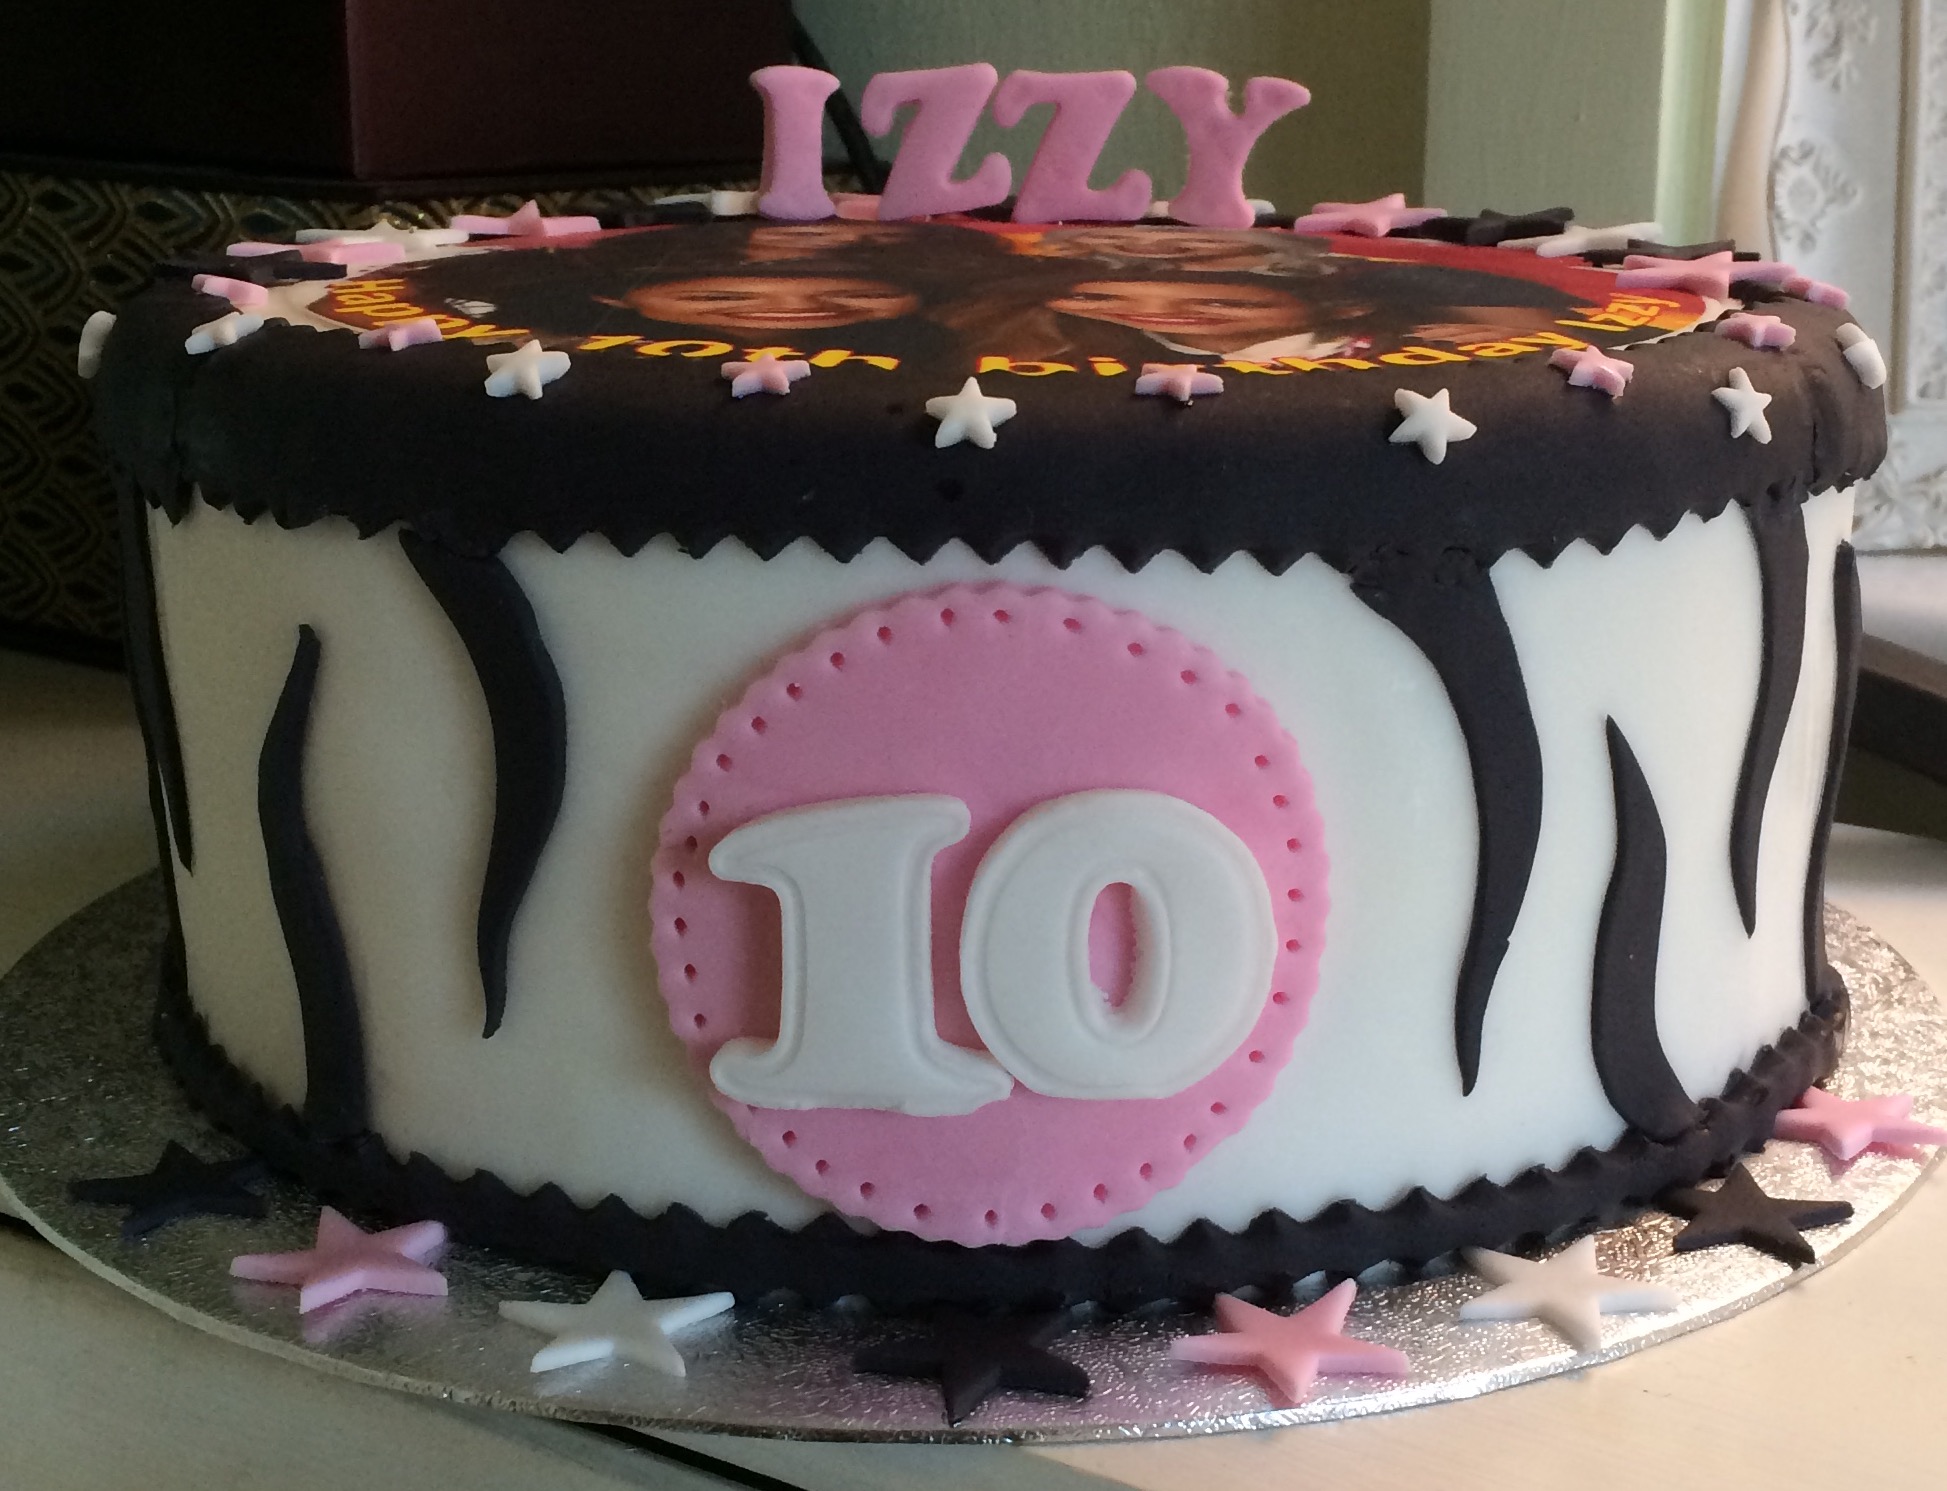 10th Birthday Cake - Village Green Bakes